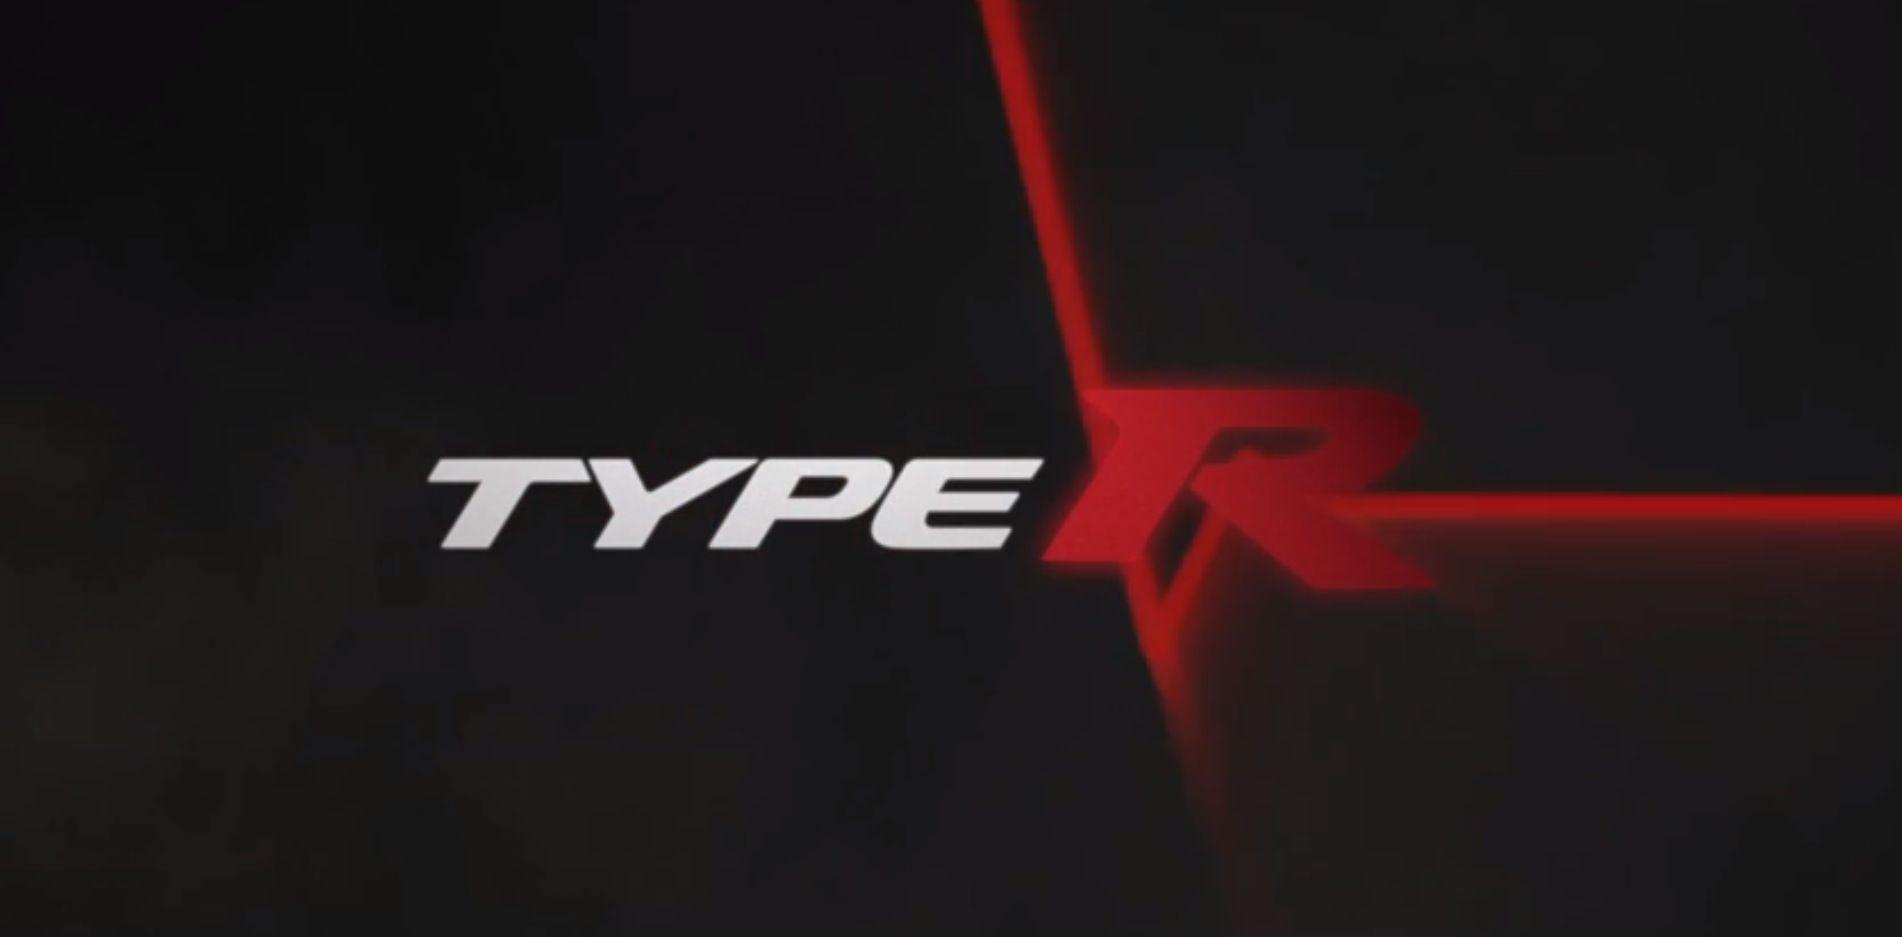 Honda Civic Type R Logo - 2015 Honda Civic Type R will Debut on March 2 - autoevolution